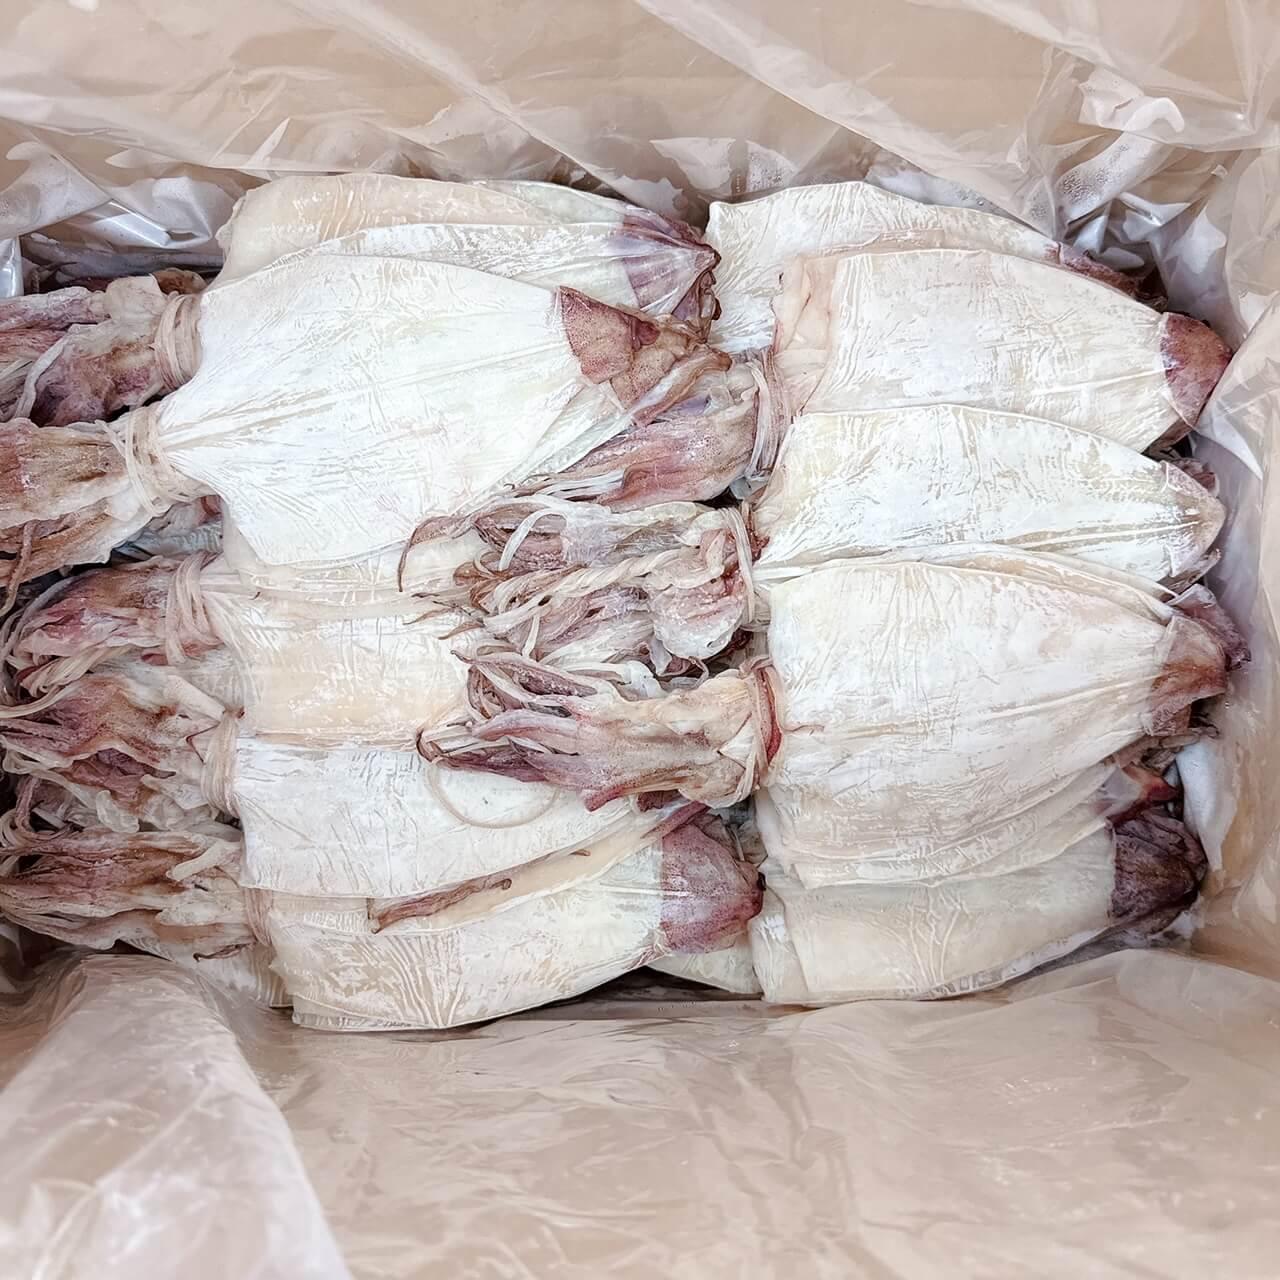 Grand Gift Premium Grade Dried Skinless Squid, Dried Calamari (1LB)